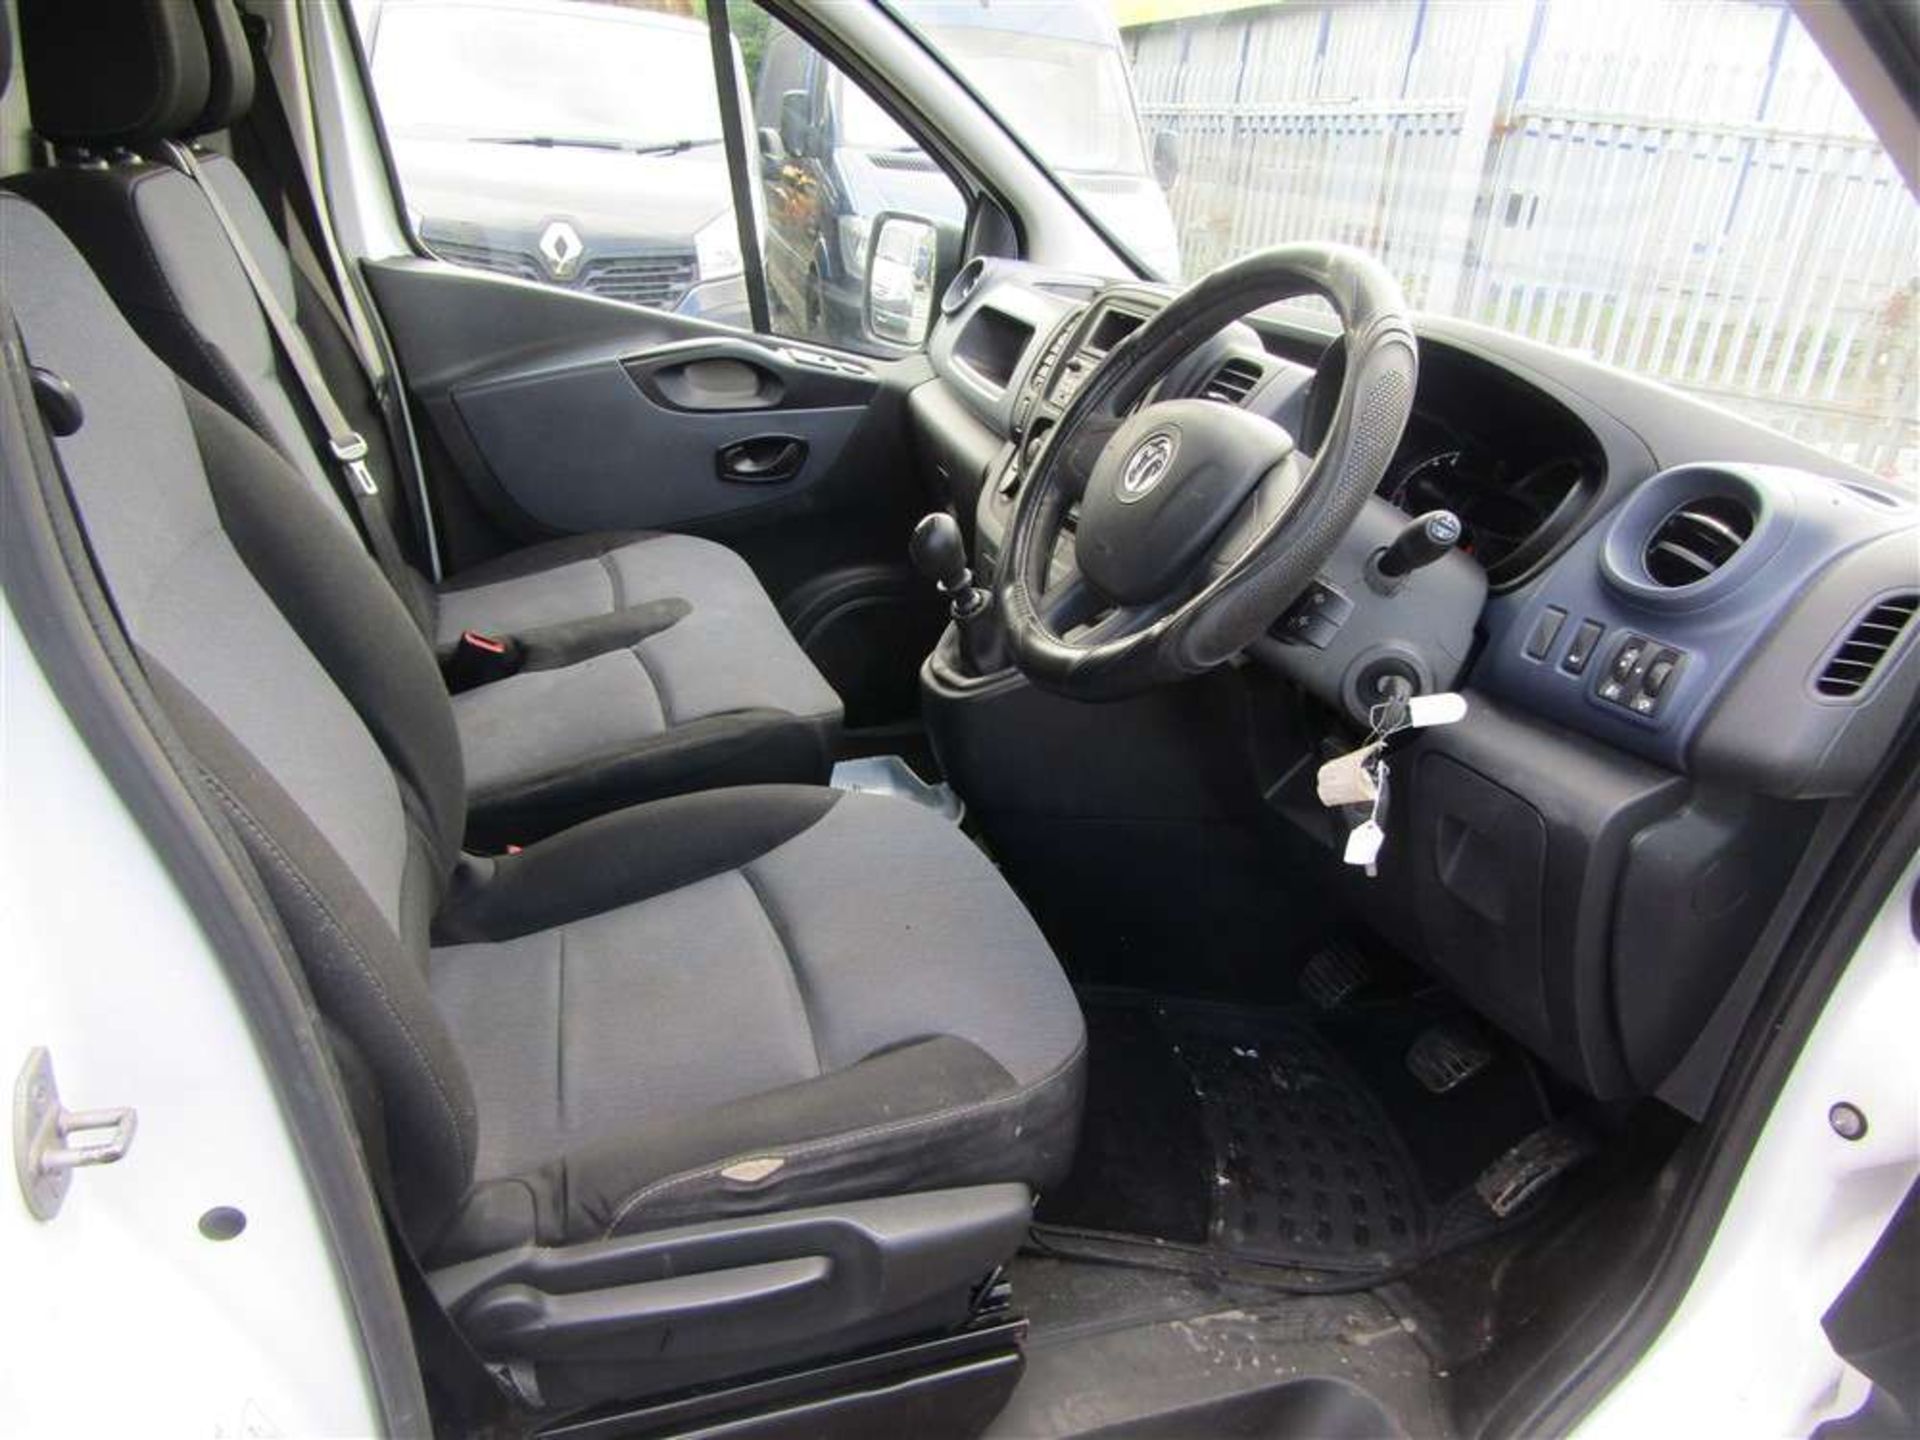 2017 17 reg Vauxhall Vivaro 2700 CDTI - Image 5 of 6